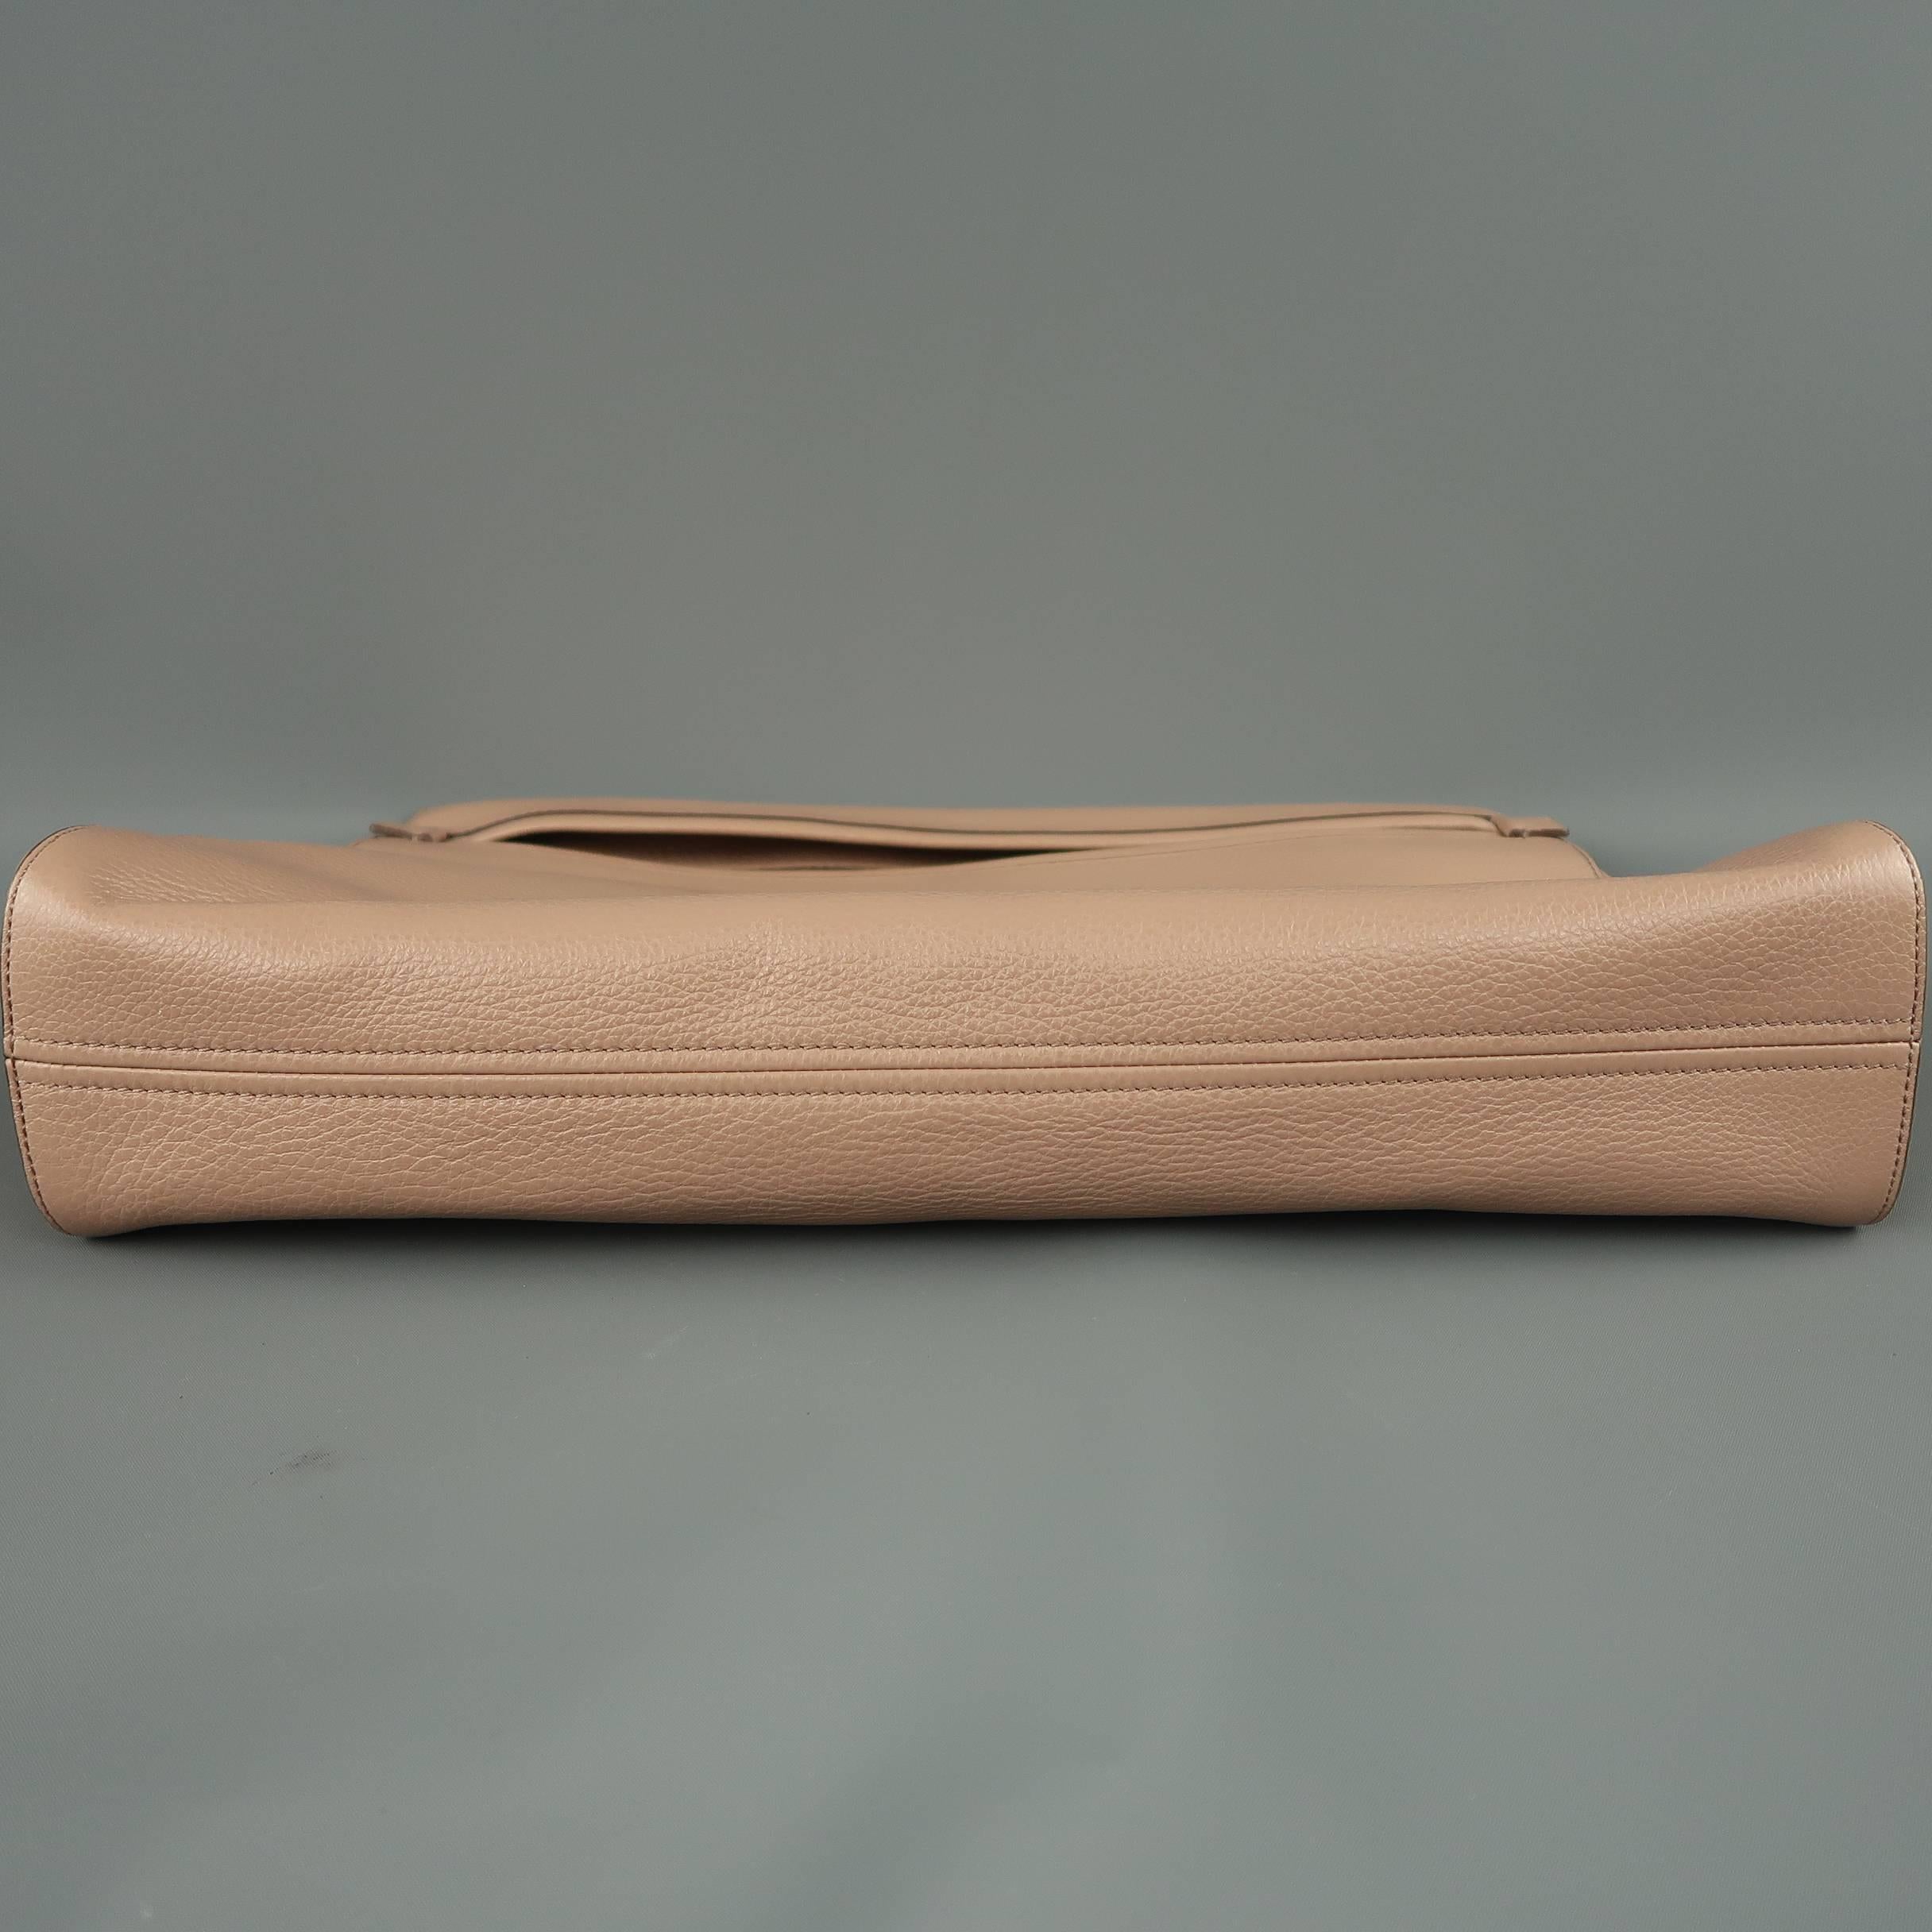 Tom Ford Handbag - Alix - Nude Textured Leather Gold Padlock Clutch Bag 4